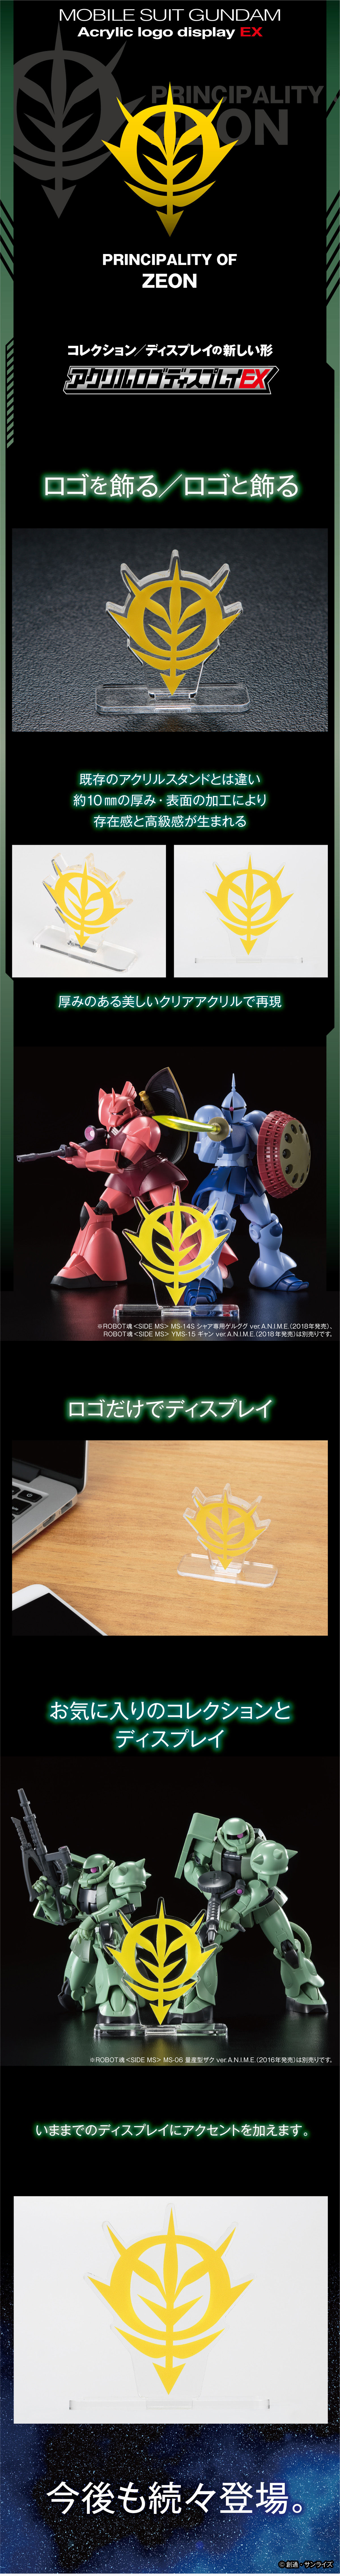 Acrylic Logo Diplay EX-Principality of ZEON Mark(Mobile Suit Gundam)